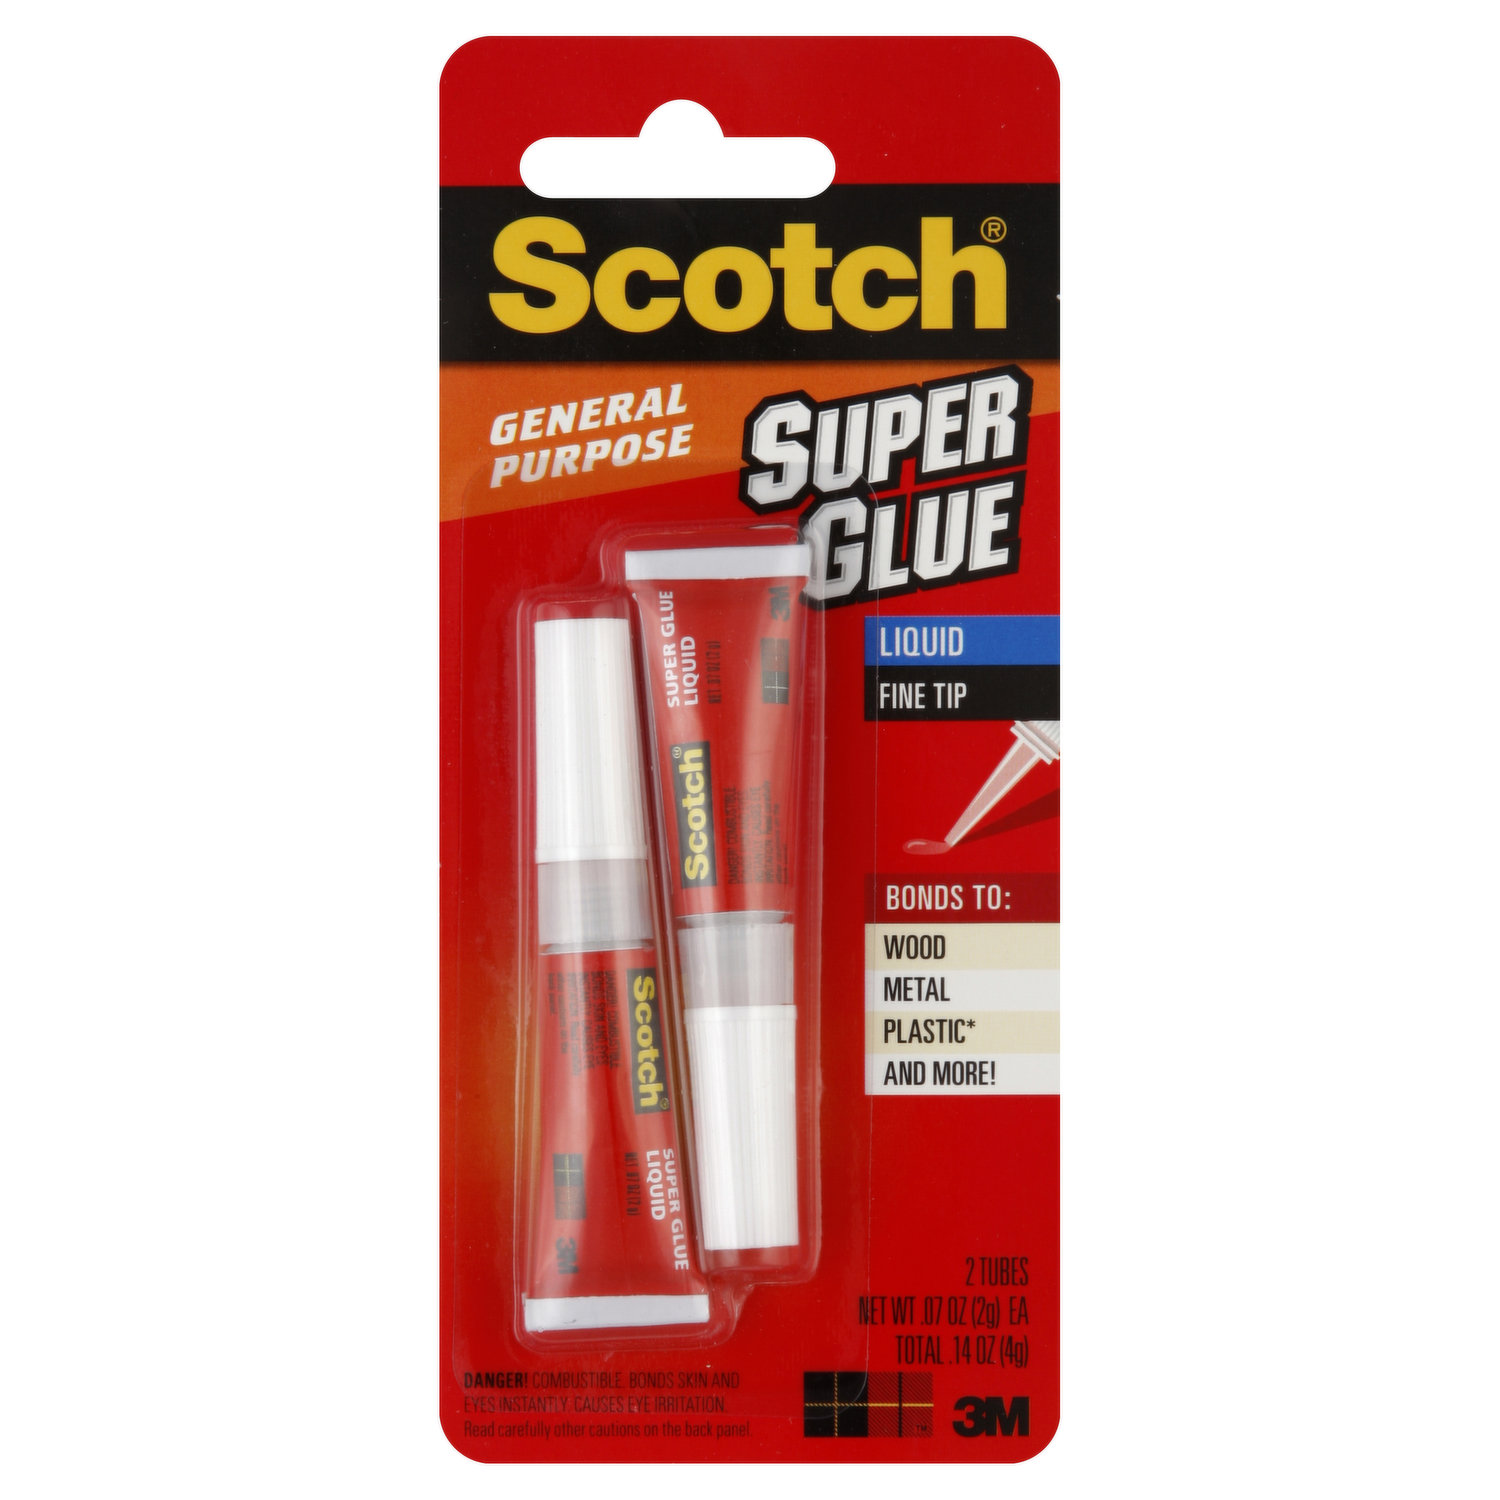  Scotch Super Glue Gel, 4-Pack of Single-Use Tubes, .017 oz  each, Fast Drying, No Run Gel Formula (AD119) : Industrial & Scientific